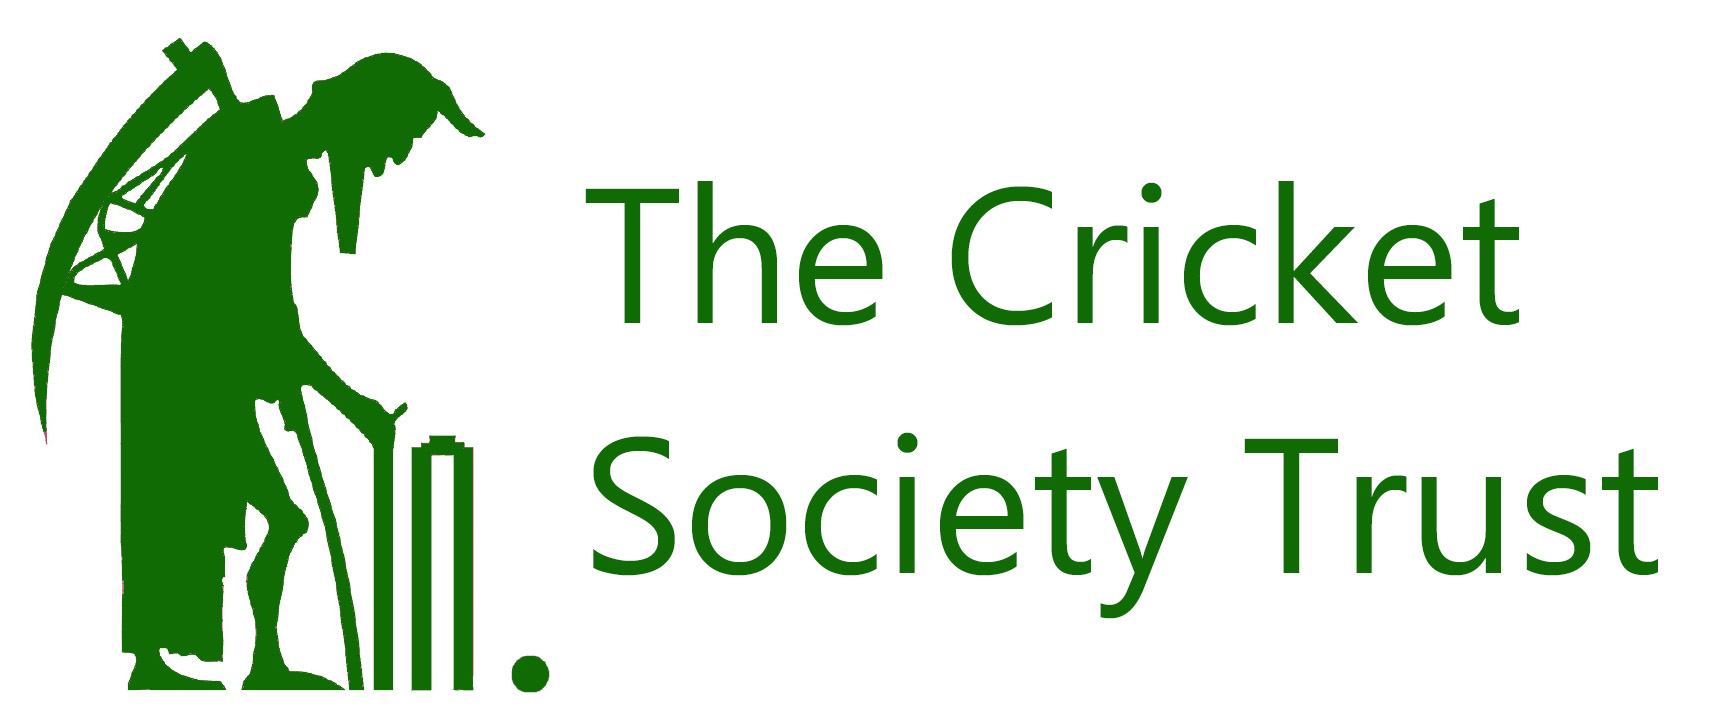 Cricket Society Trust logo update.jpg